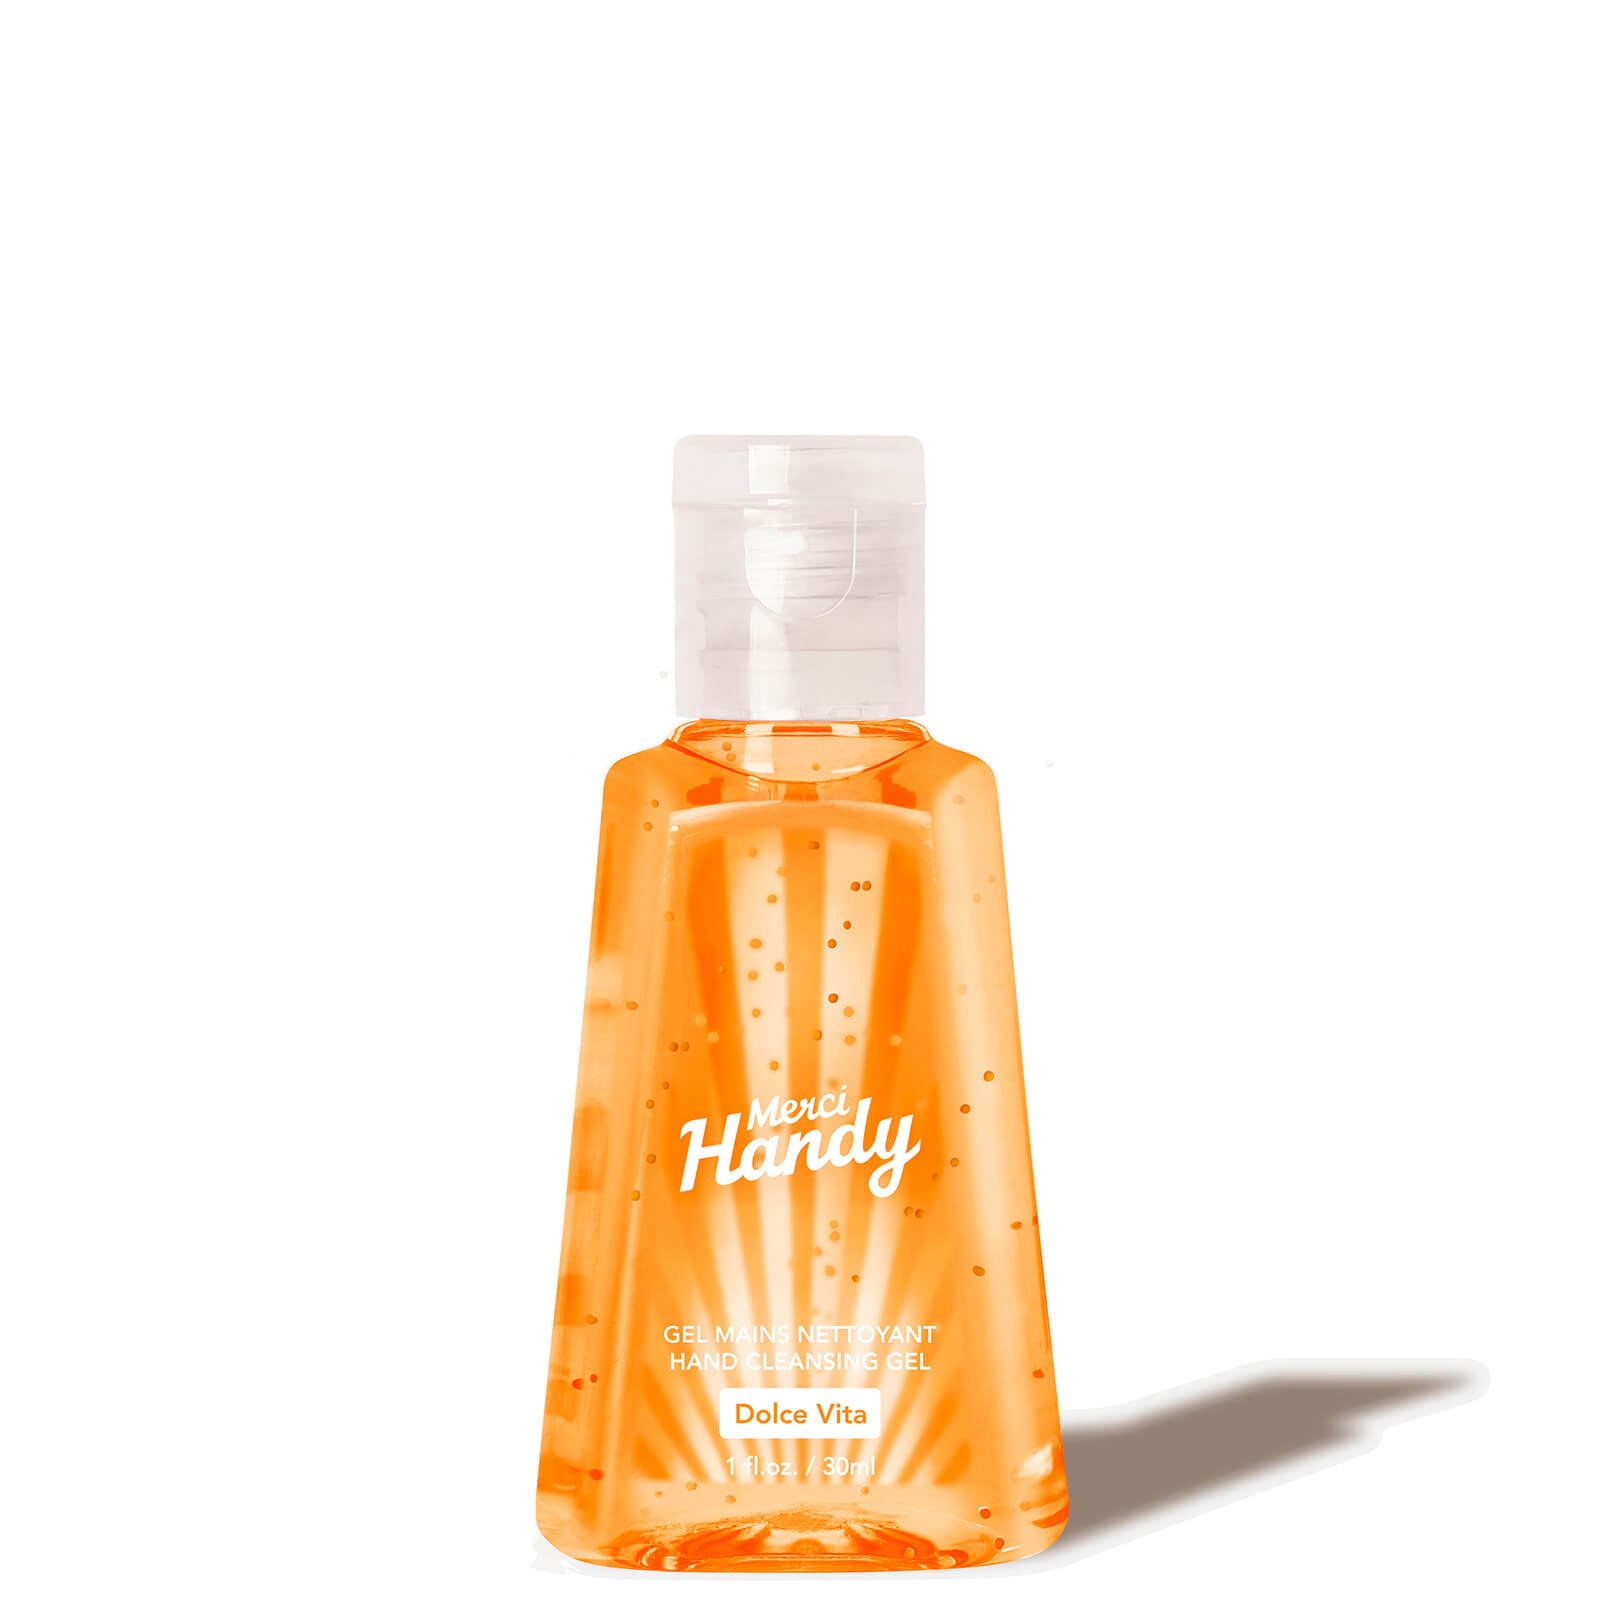 Merci Handy Hand Cleansing Gel 30ml (Various Fragrance)) - Dolce Vita